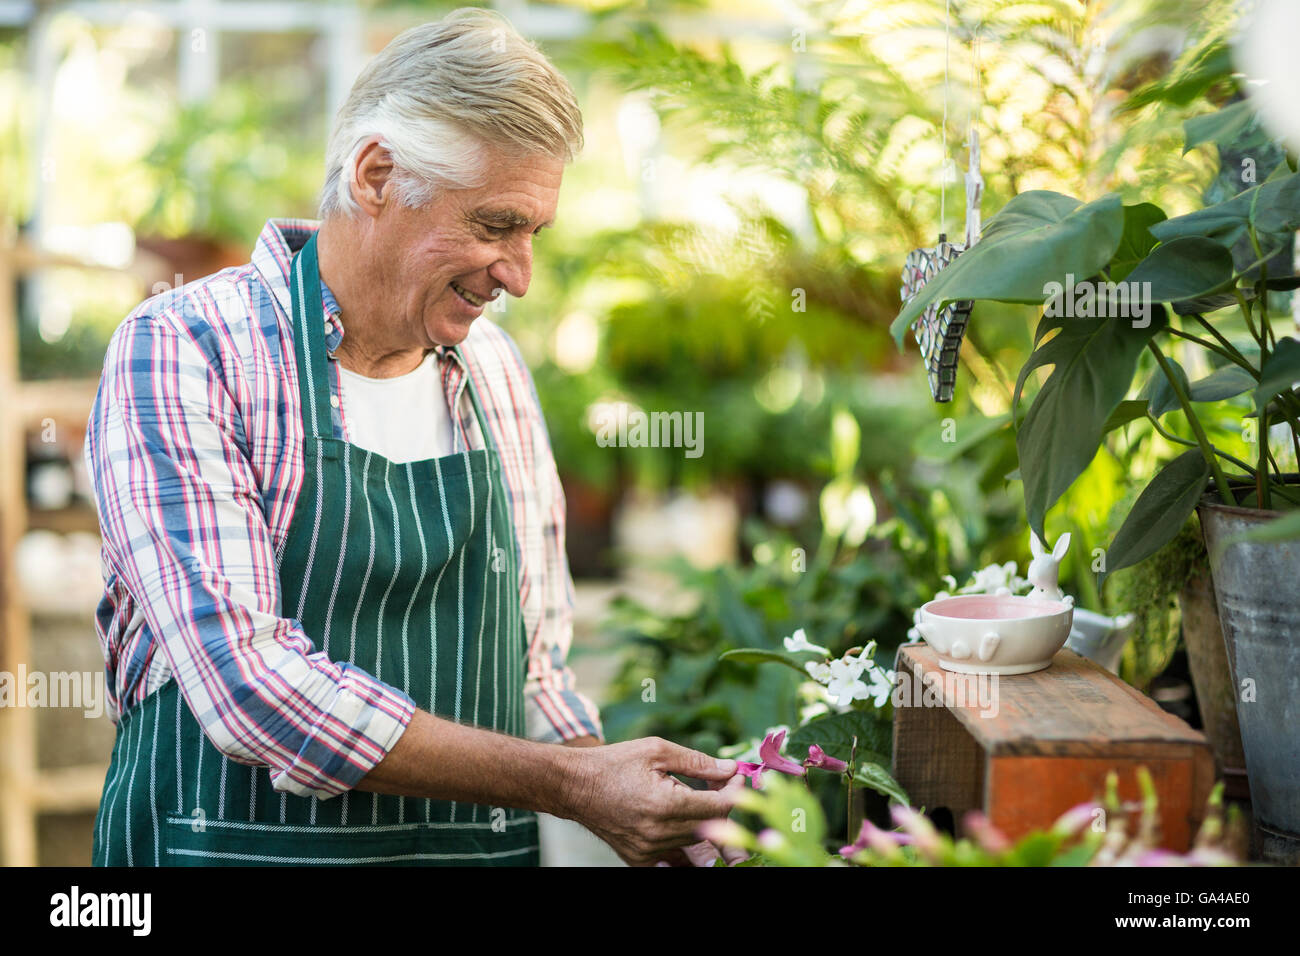 Male gardener examining plants Stock Photo